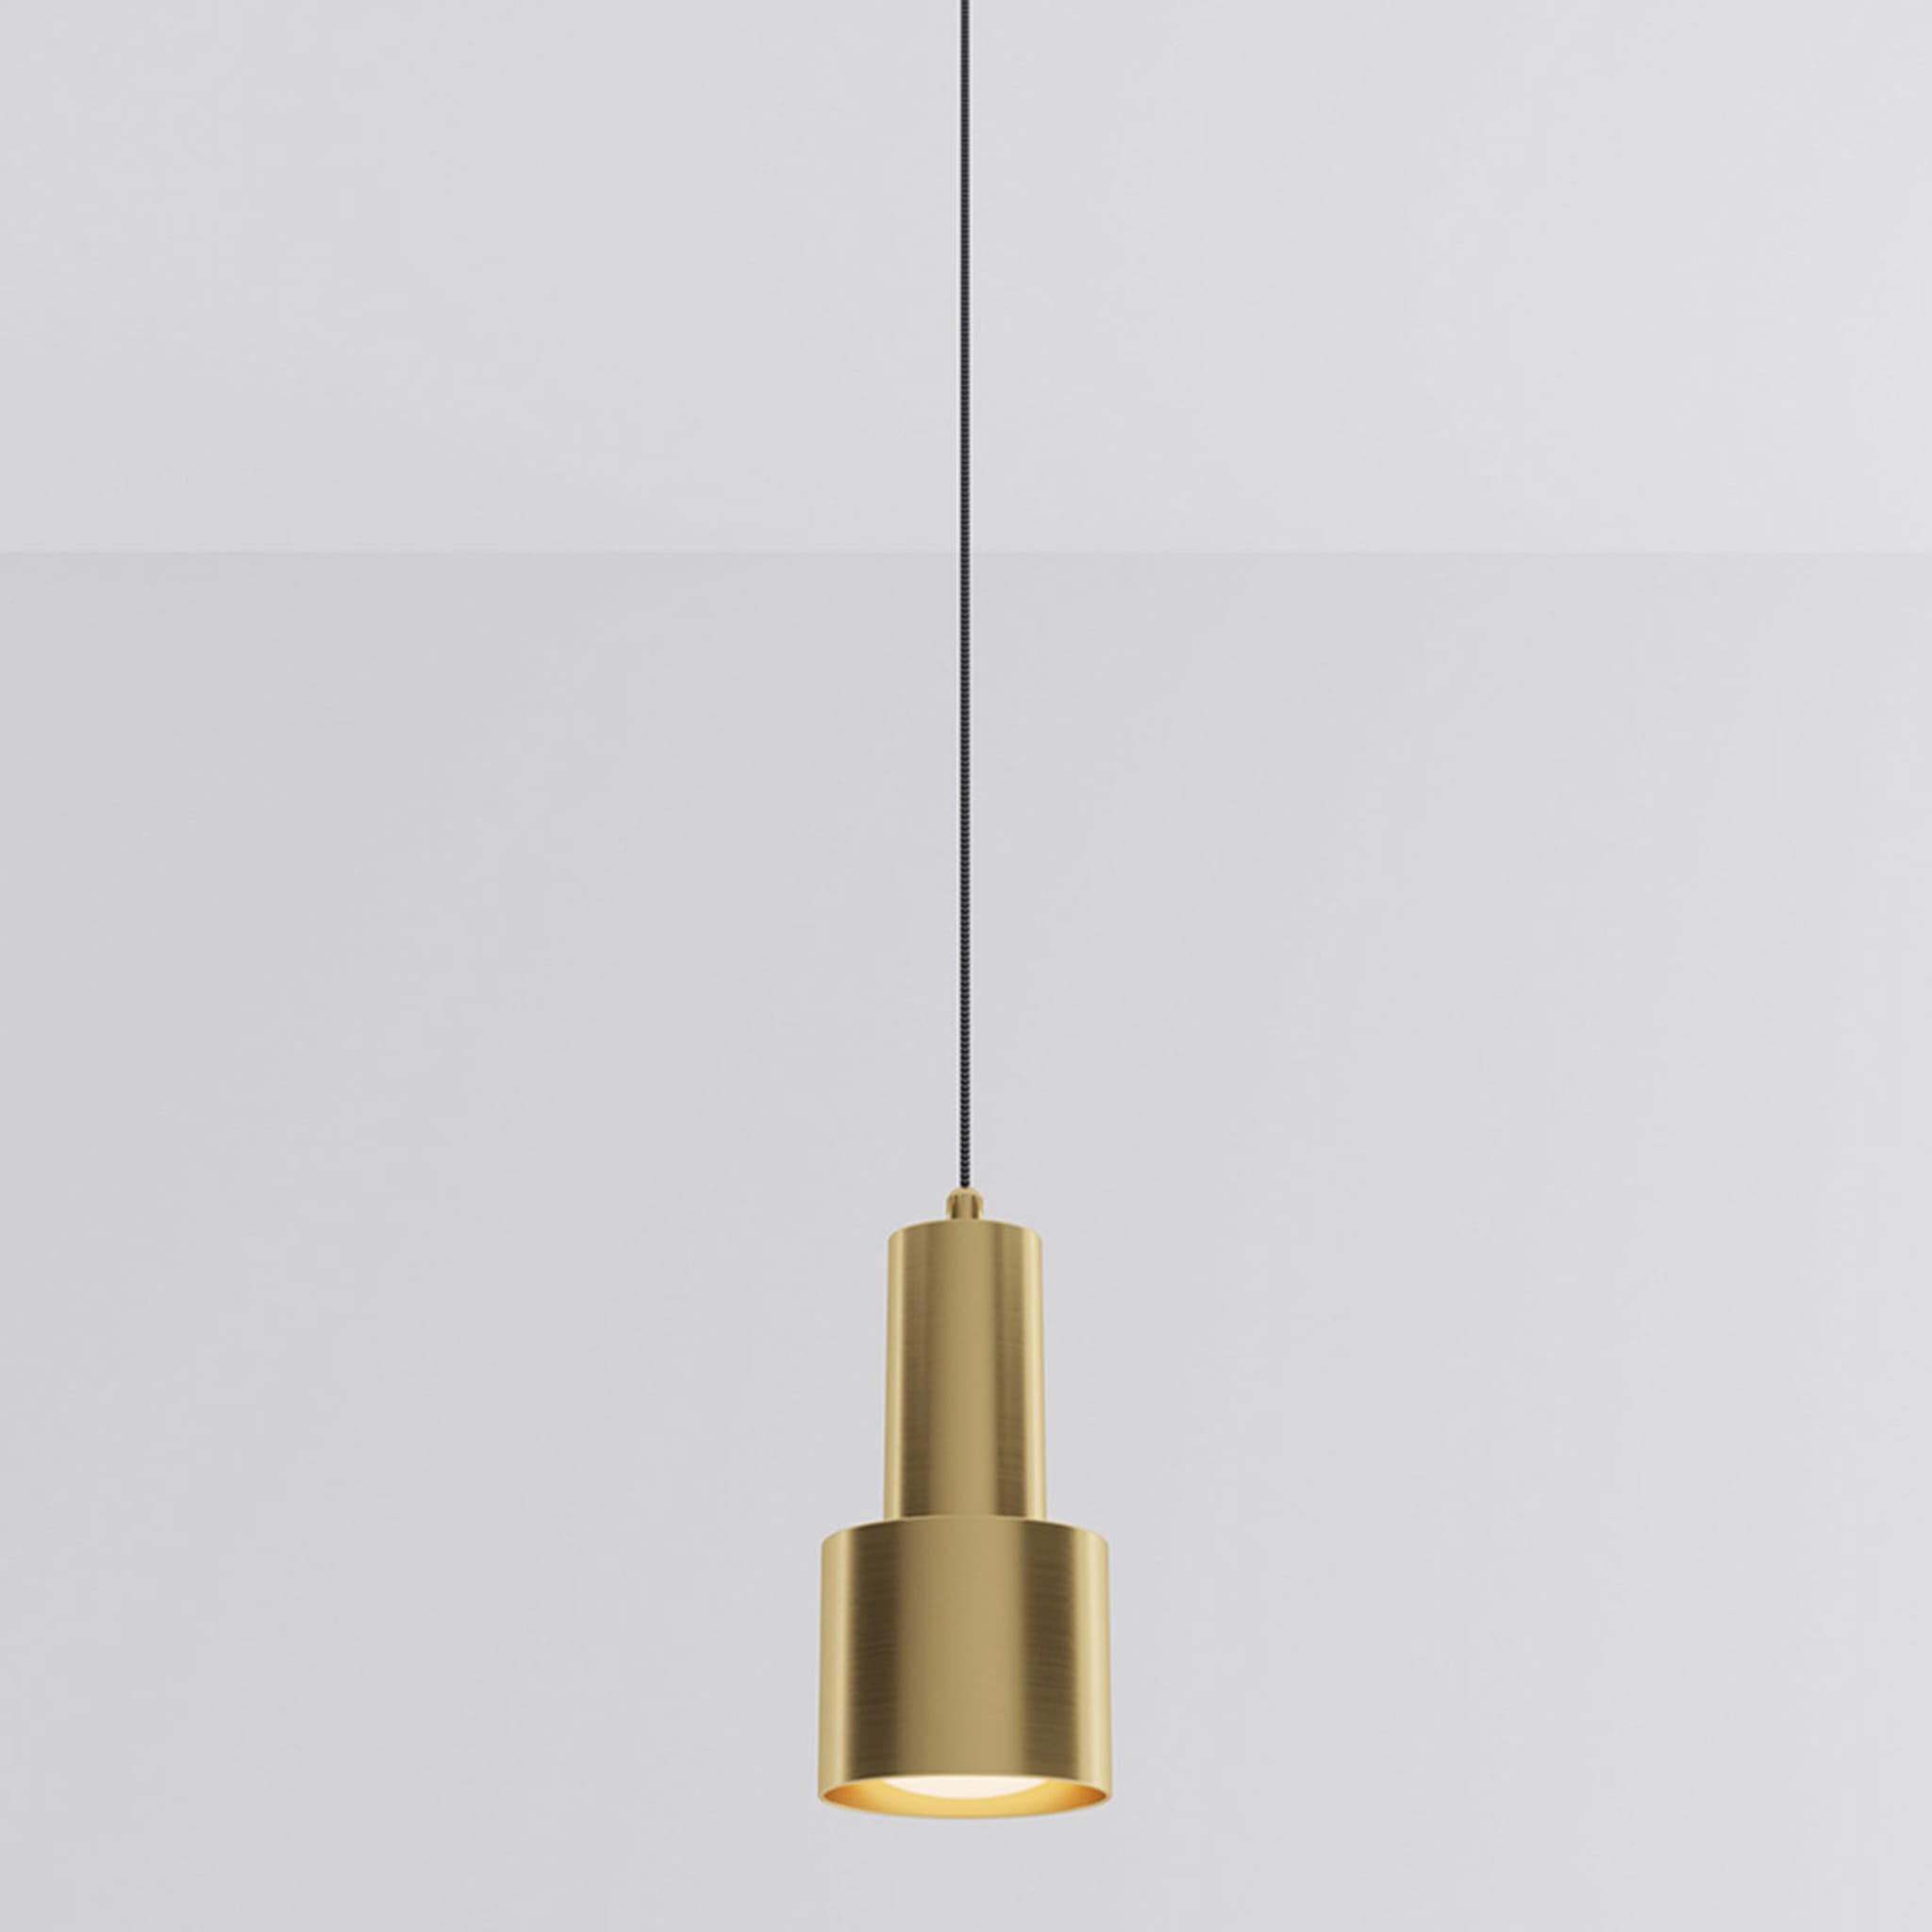 Light Gallery Luxury GP Bronzed Pendant Lamp by Marco Pollice - Alternative view 1